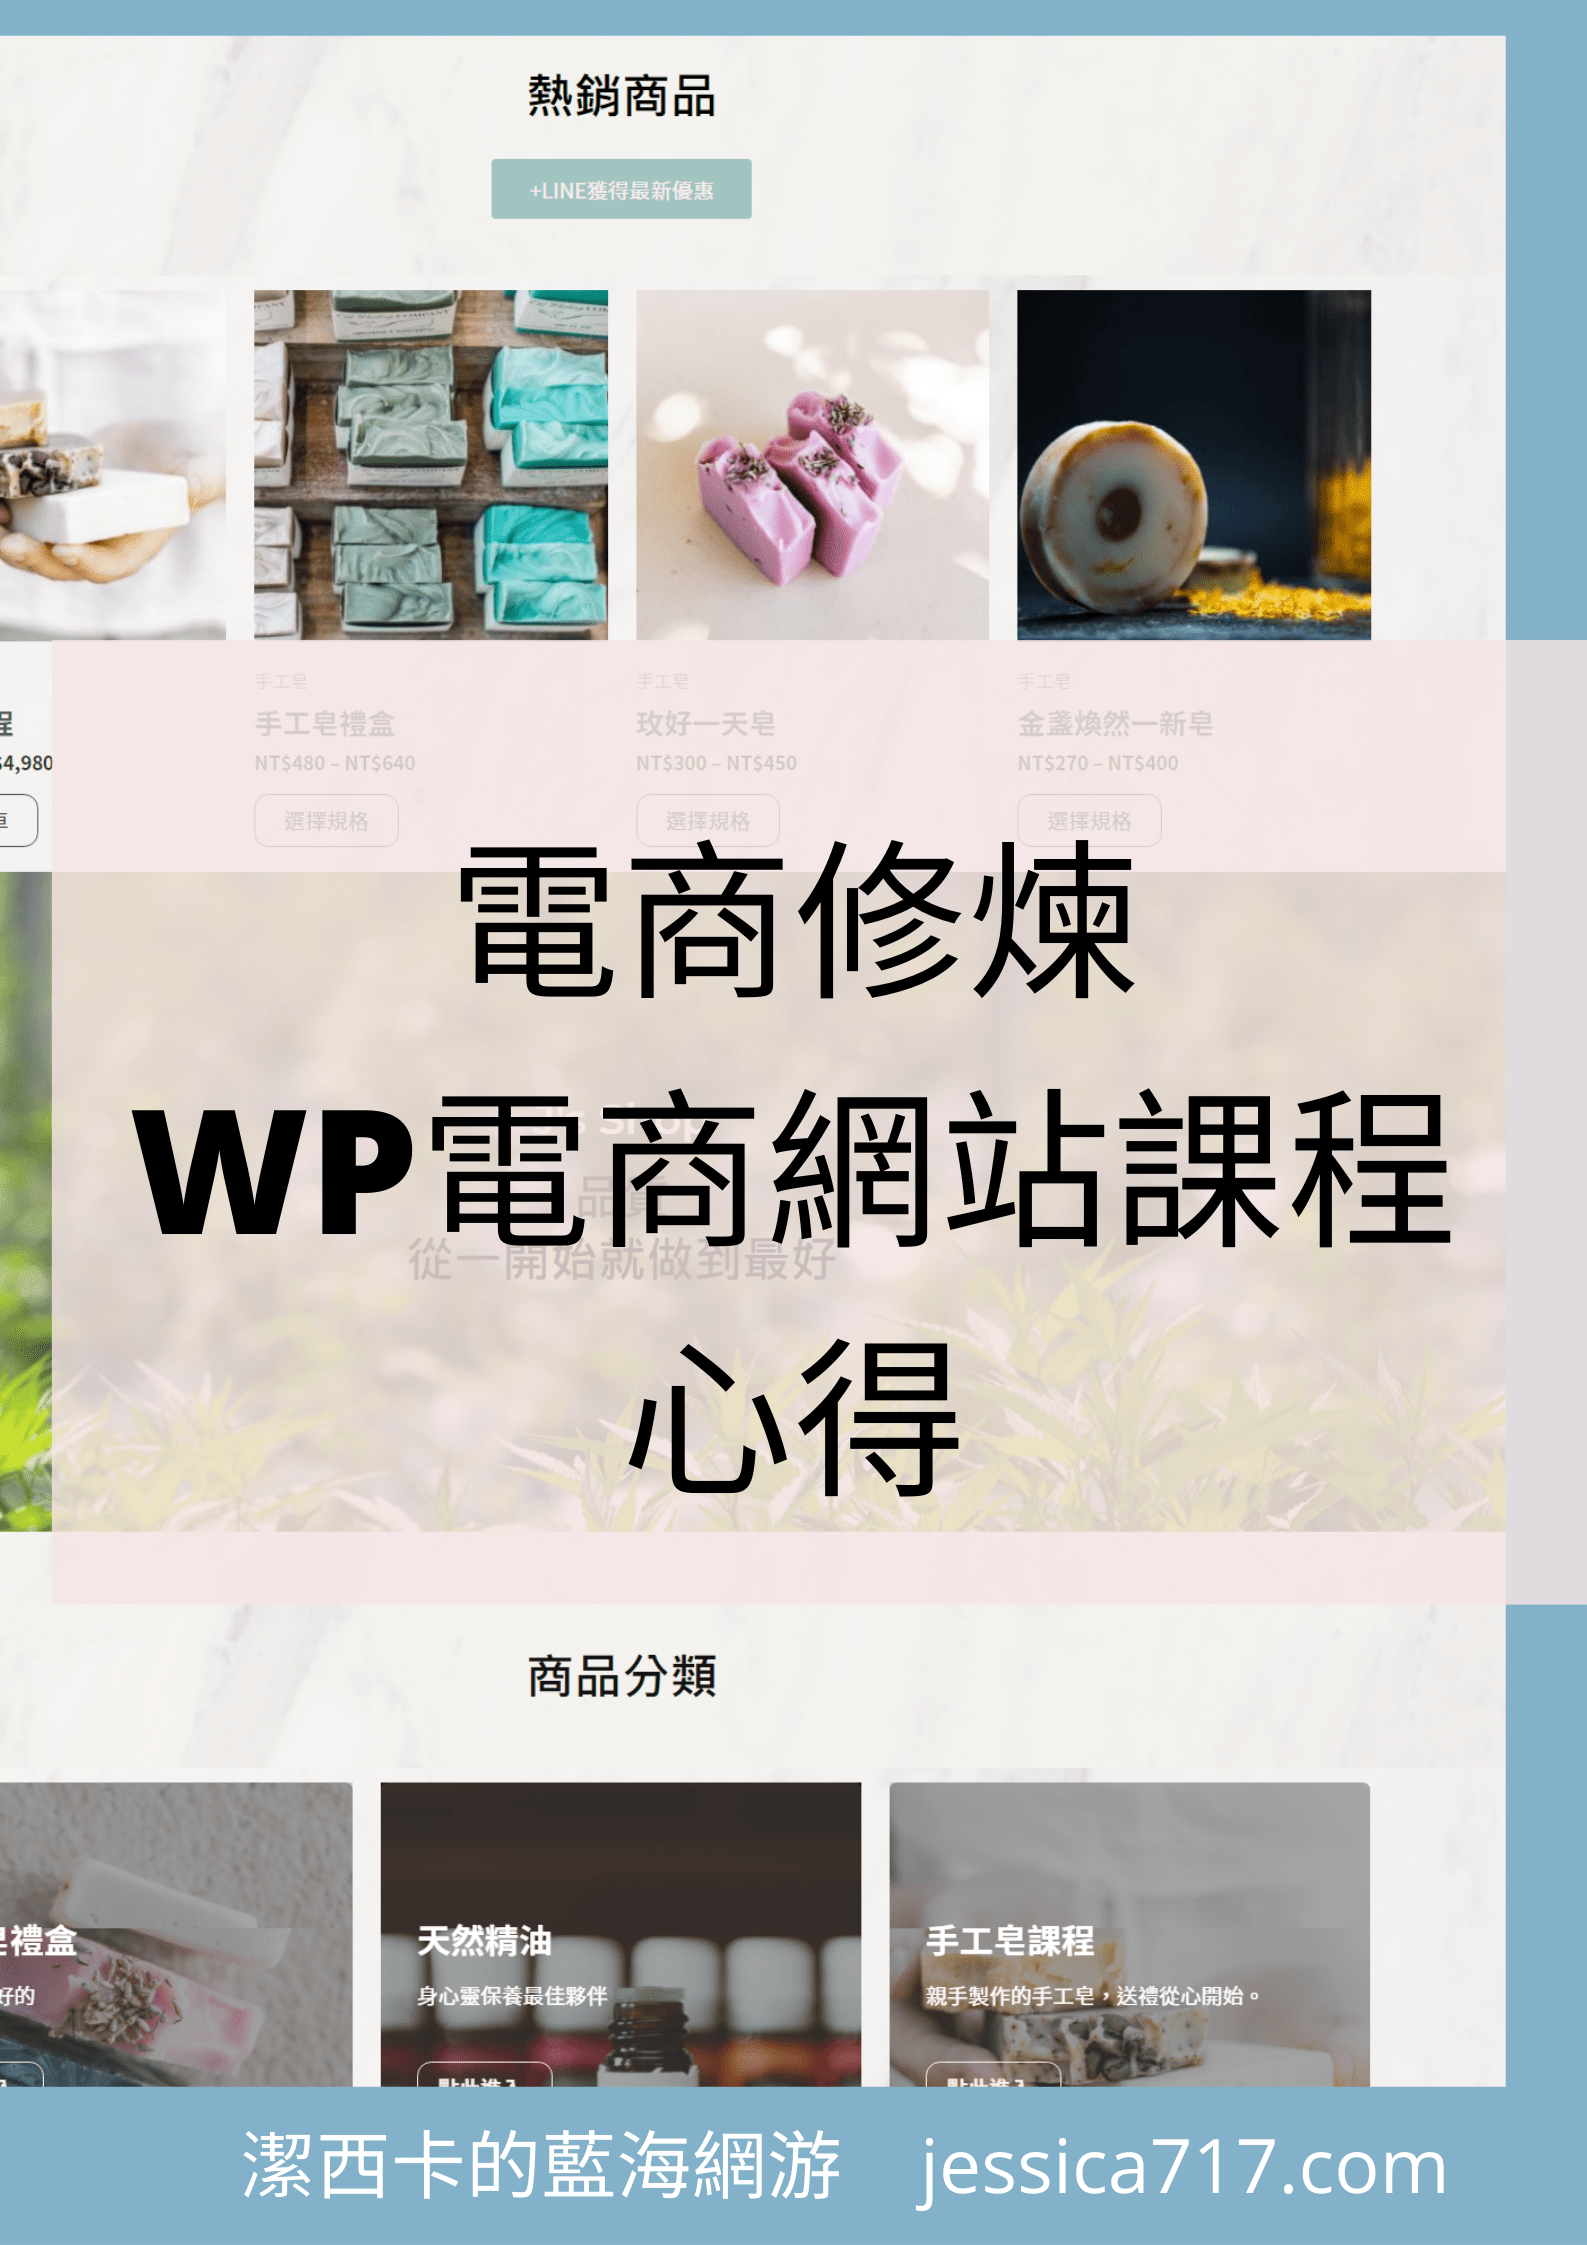 WordPress電商課程